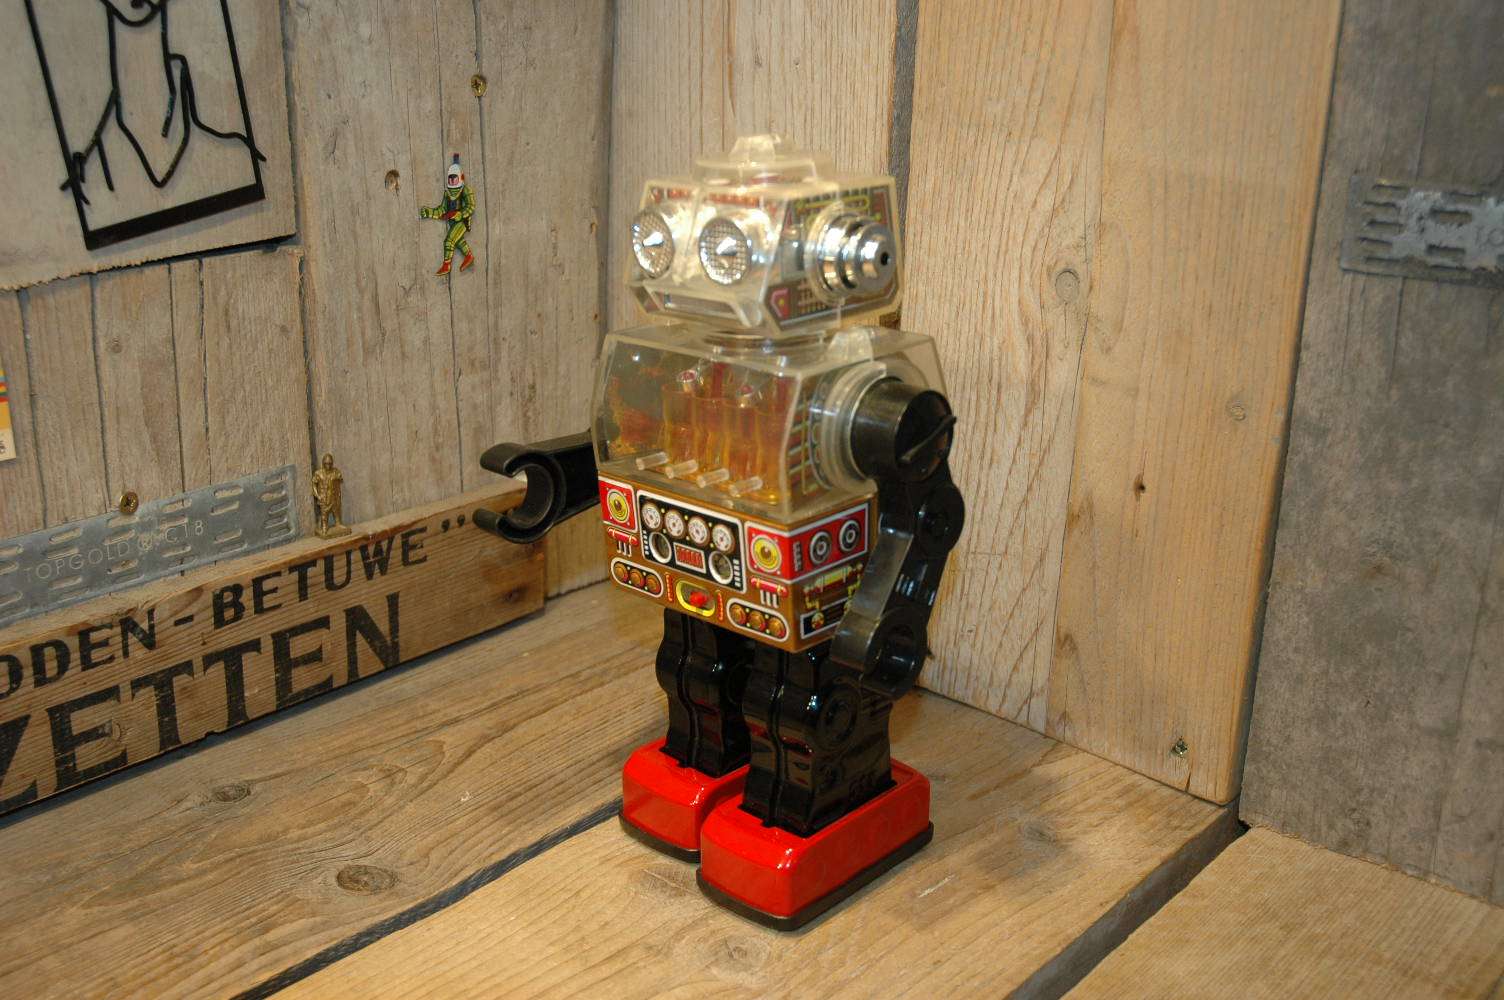 Horikawa - Piston Robot